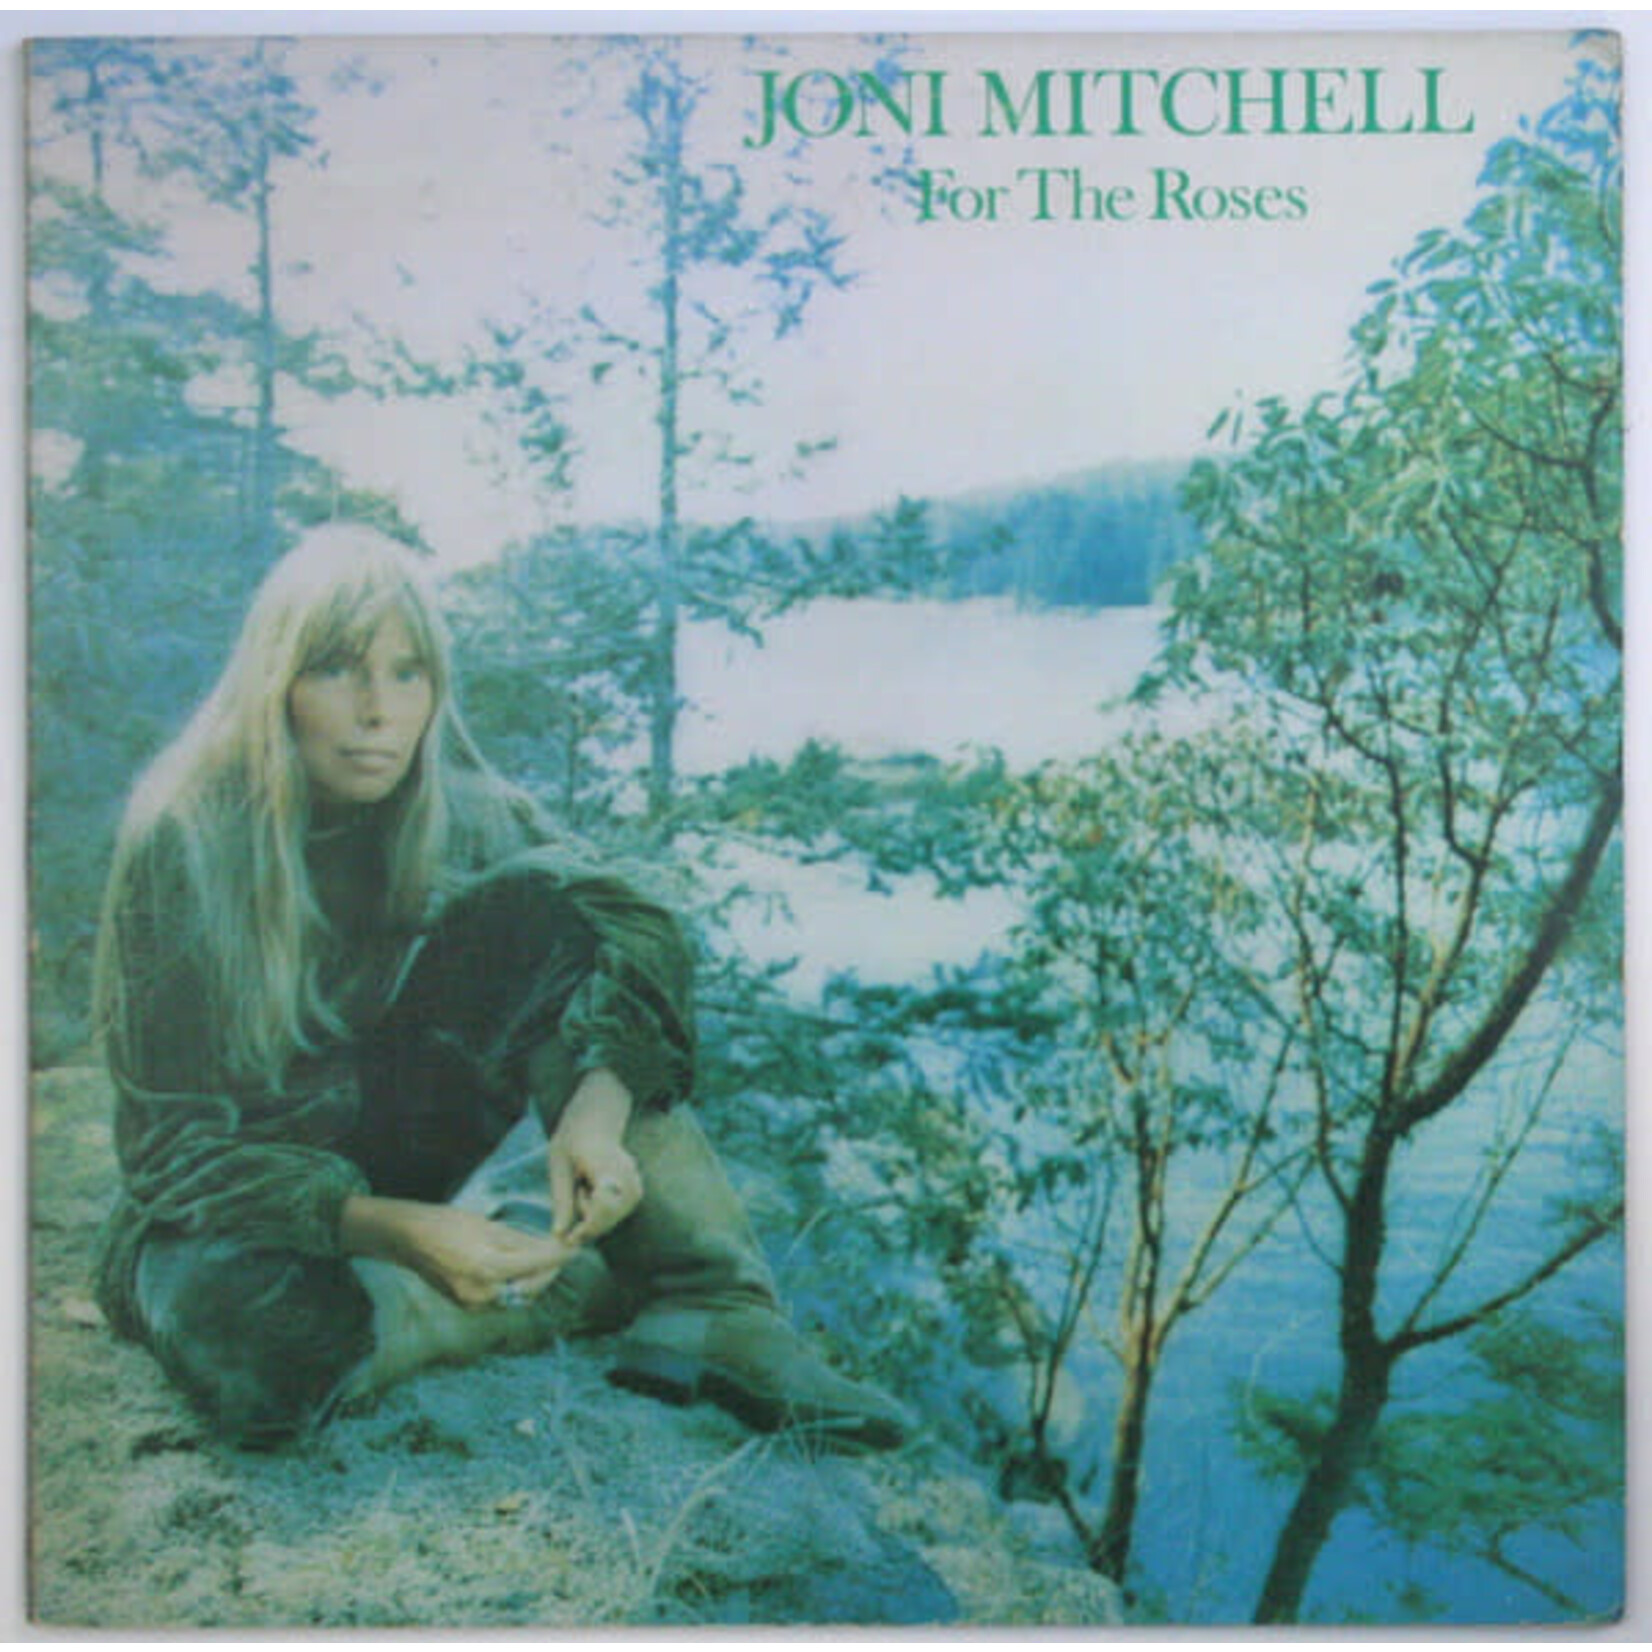 Joni Mitchell Joni Mitchell – For The Roses (G+, 1972, LP, Asylum Records – SD 5057)